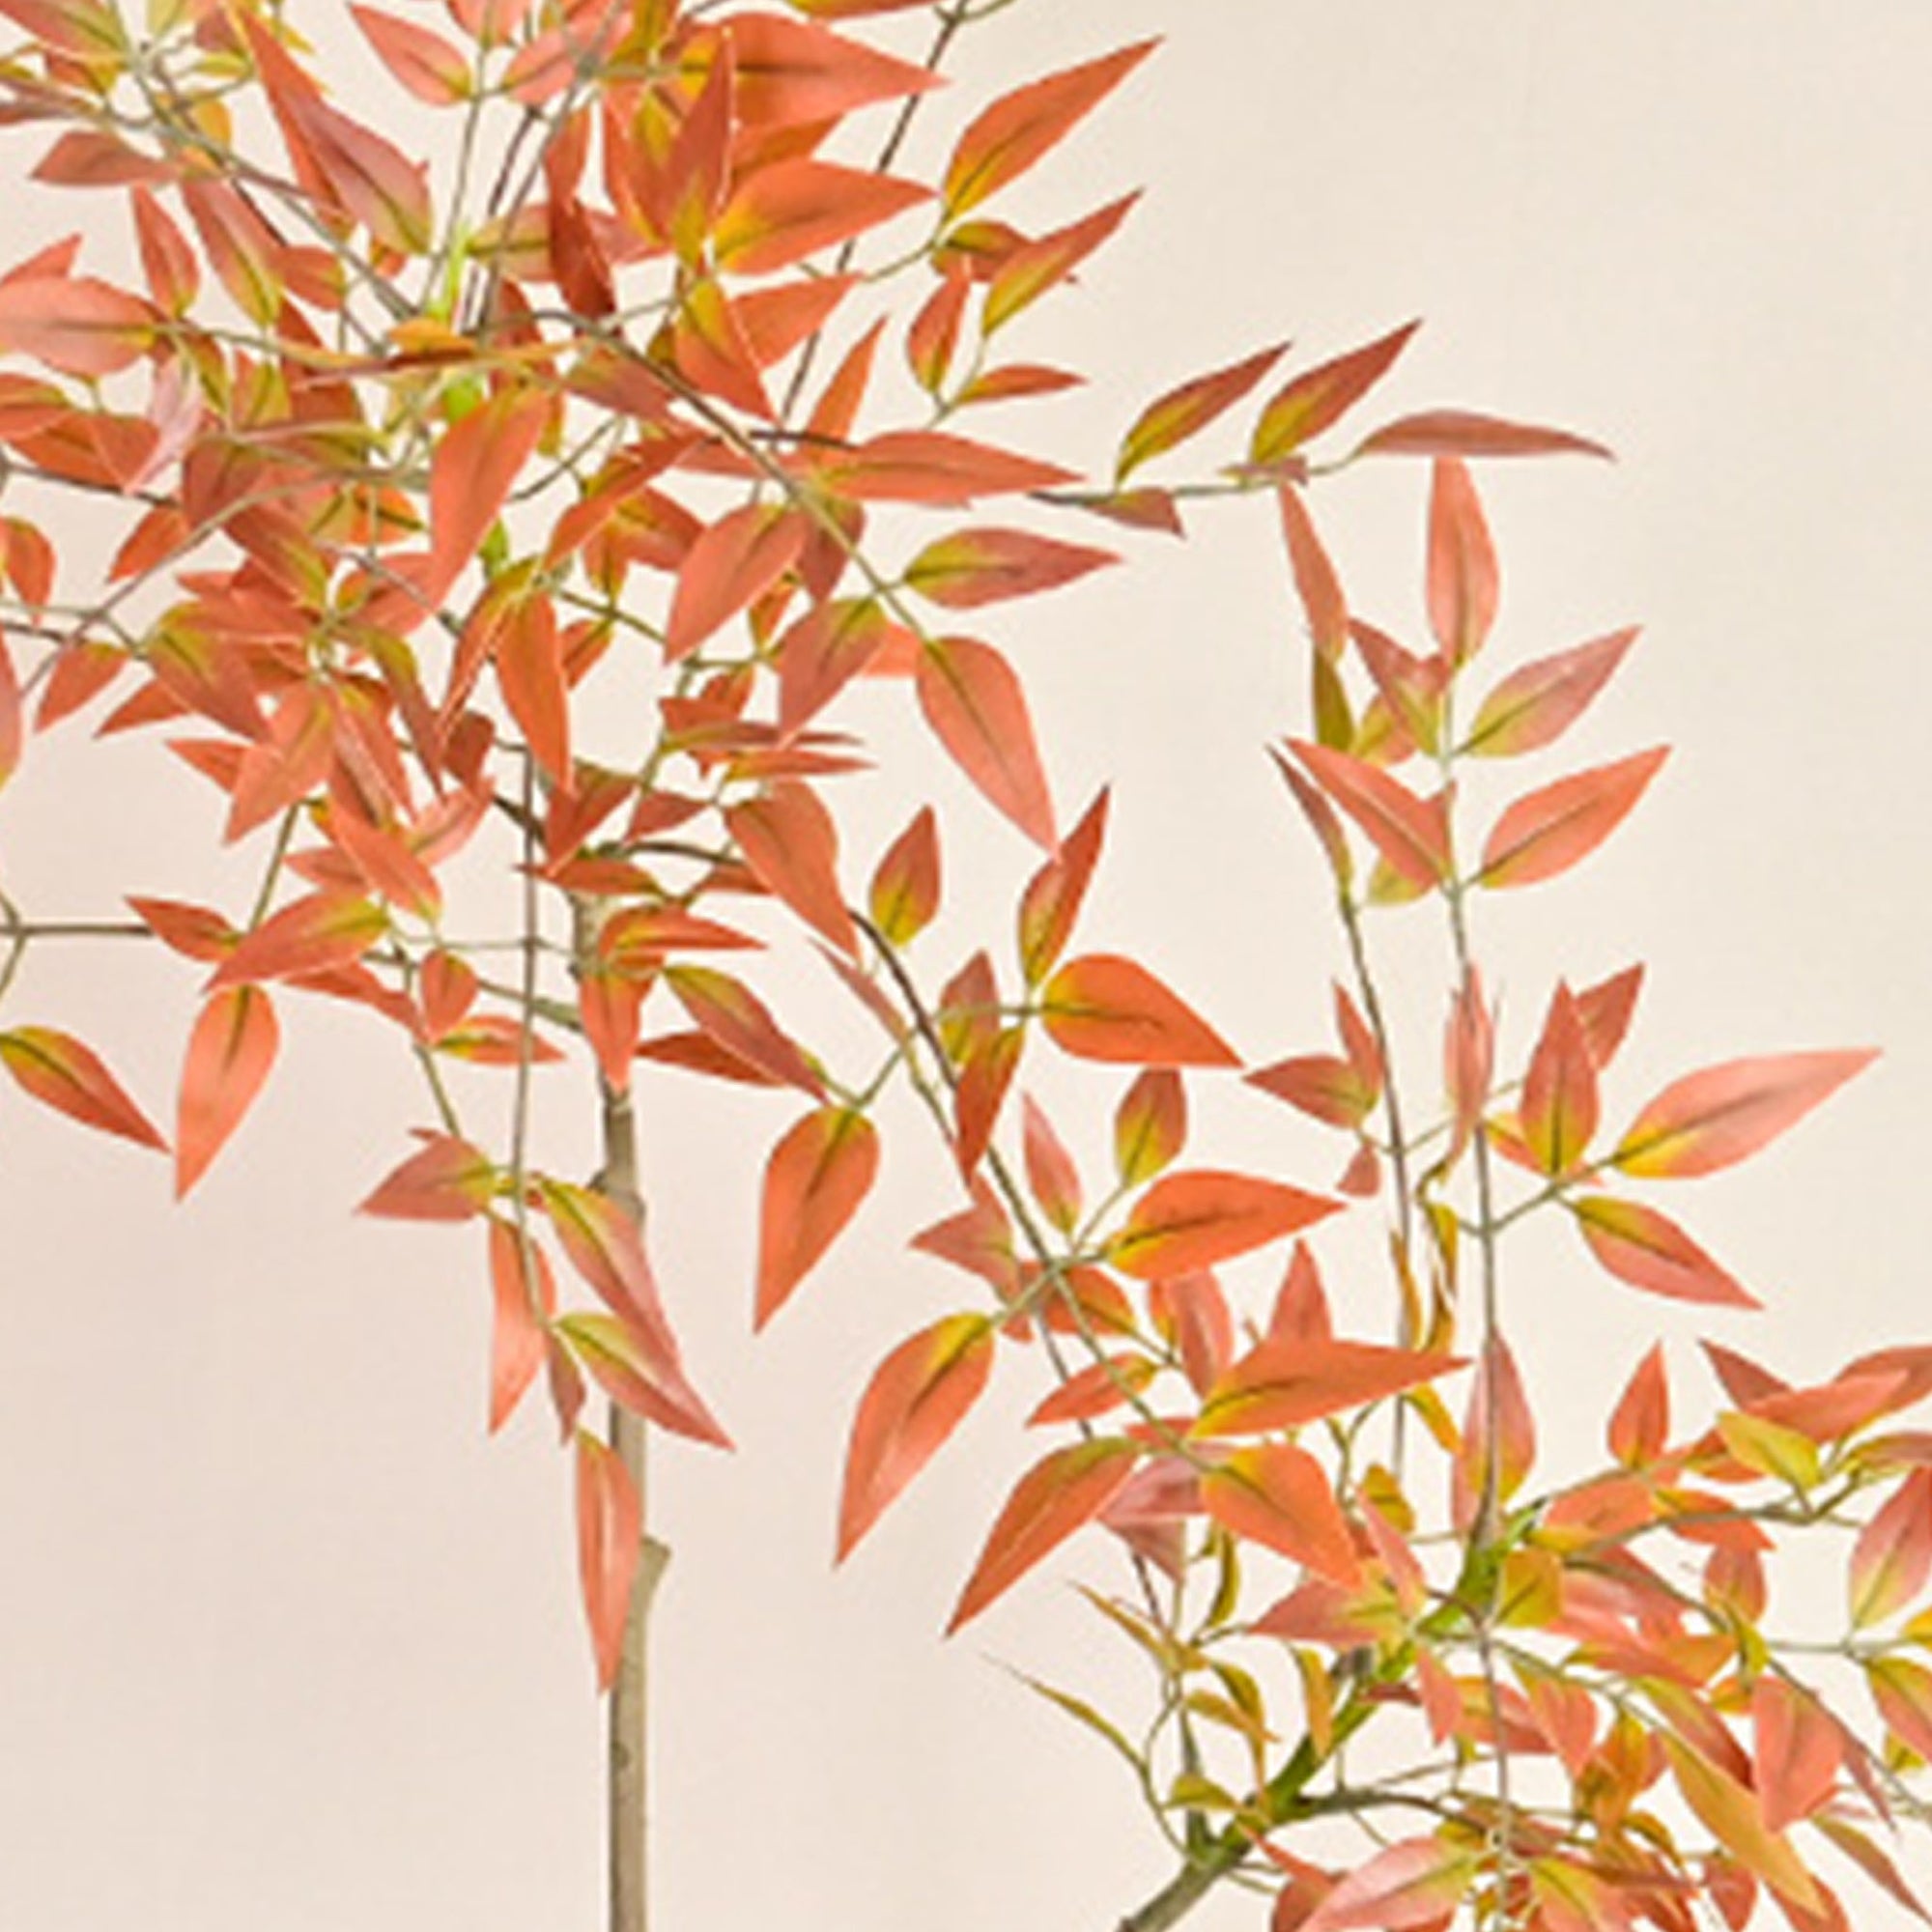 Artificial Foliage Nandina Leaves Branch Seasonal Decor 41"